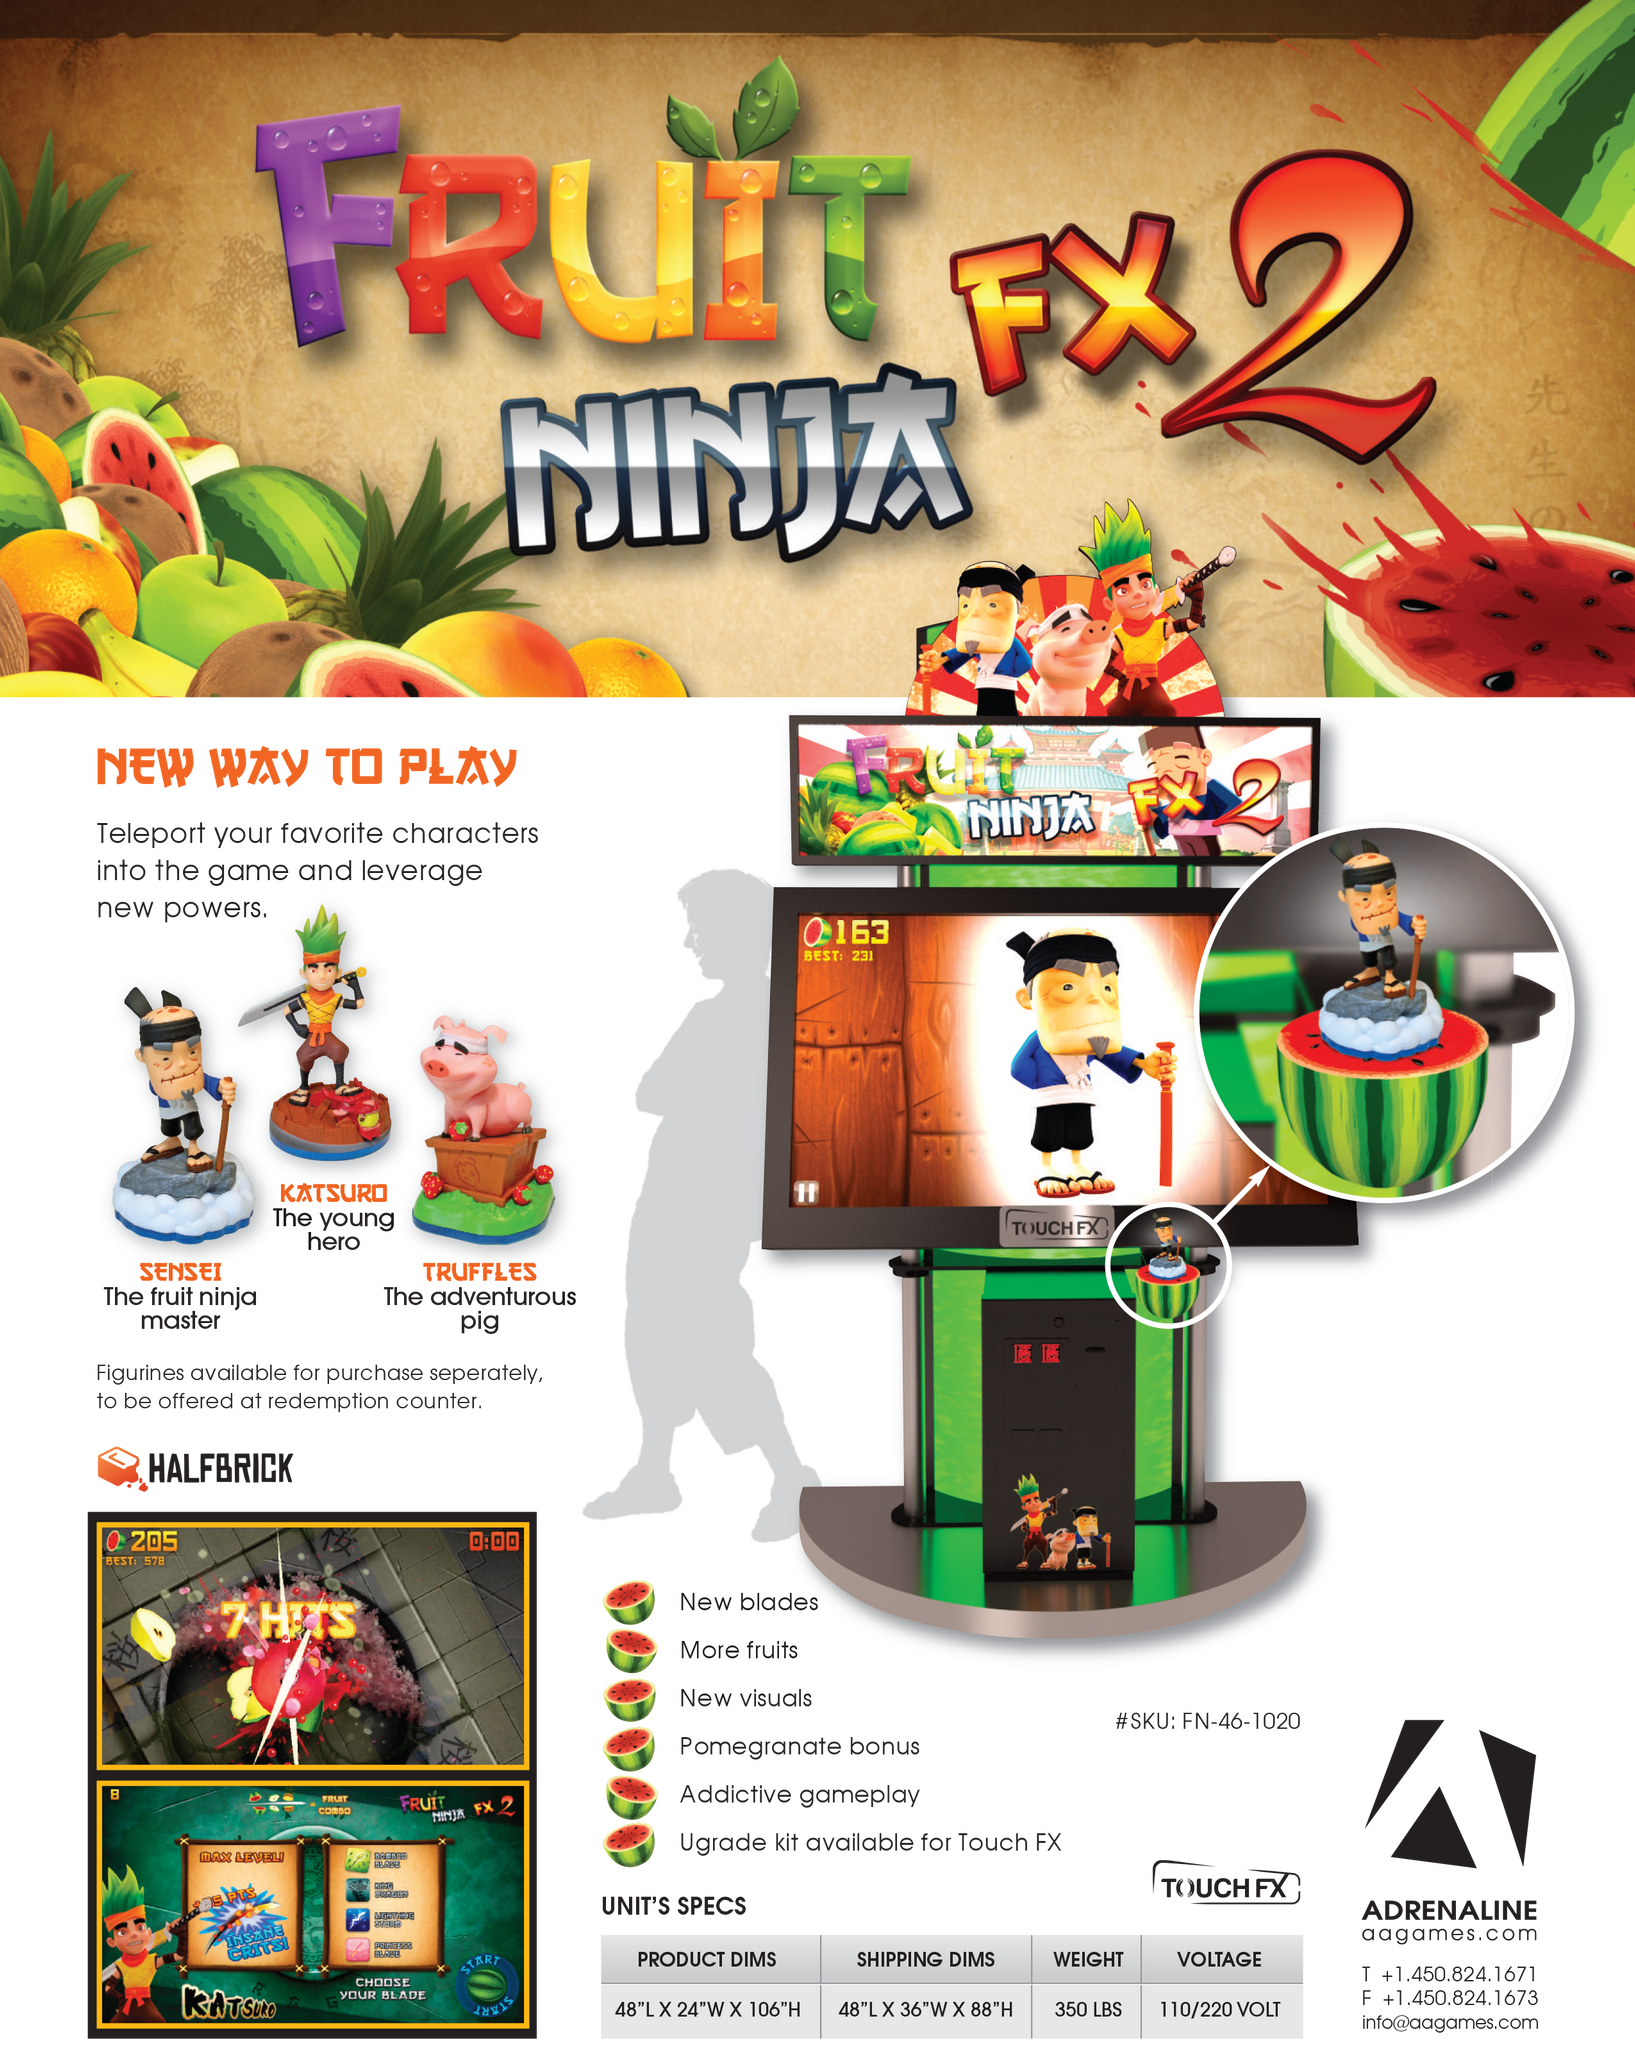 Funland - Like Fruit Ninja? Then try our Fruit Ninja FX2! It has